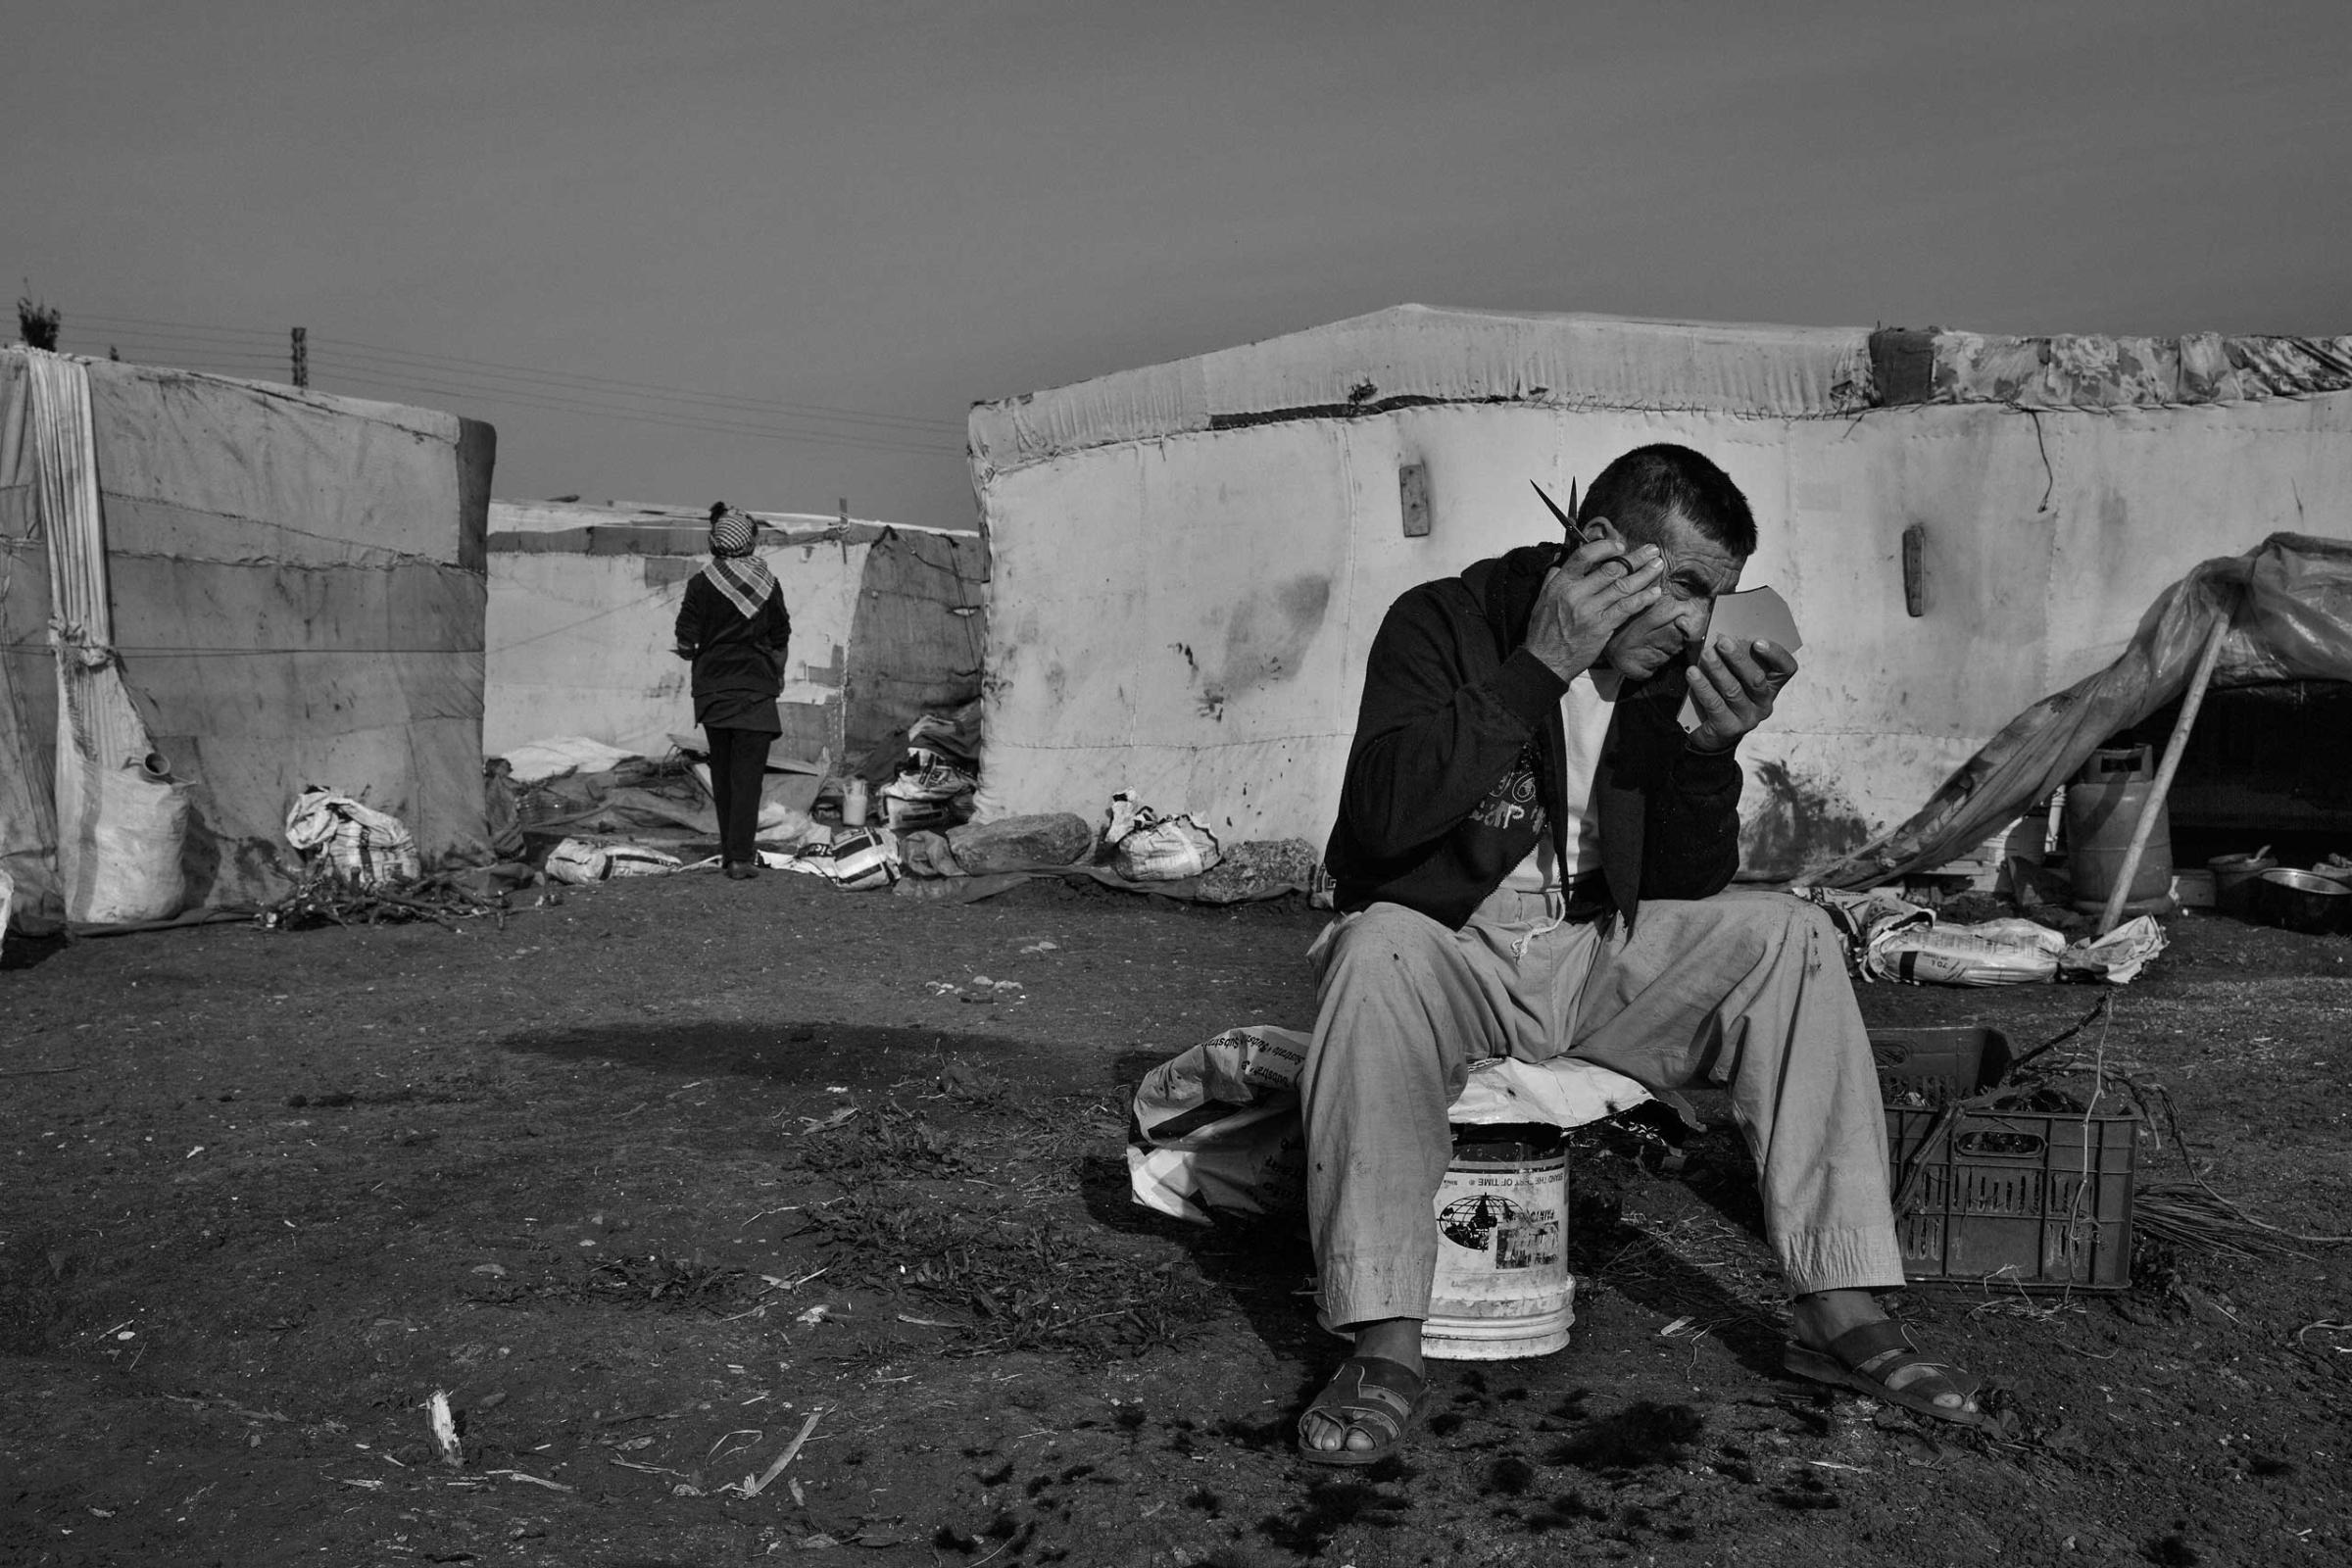 January 2014. Northern Lebanon, near the Syrian border. Syrian refugees in Lebanon's informal settlements.